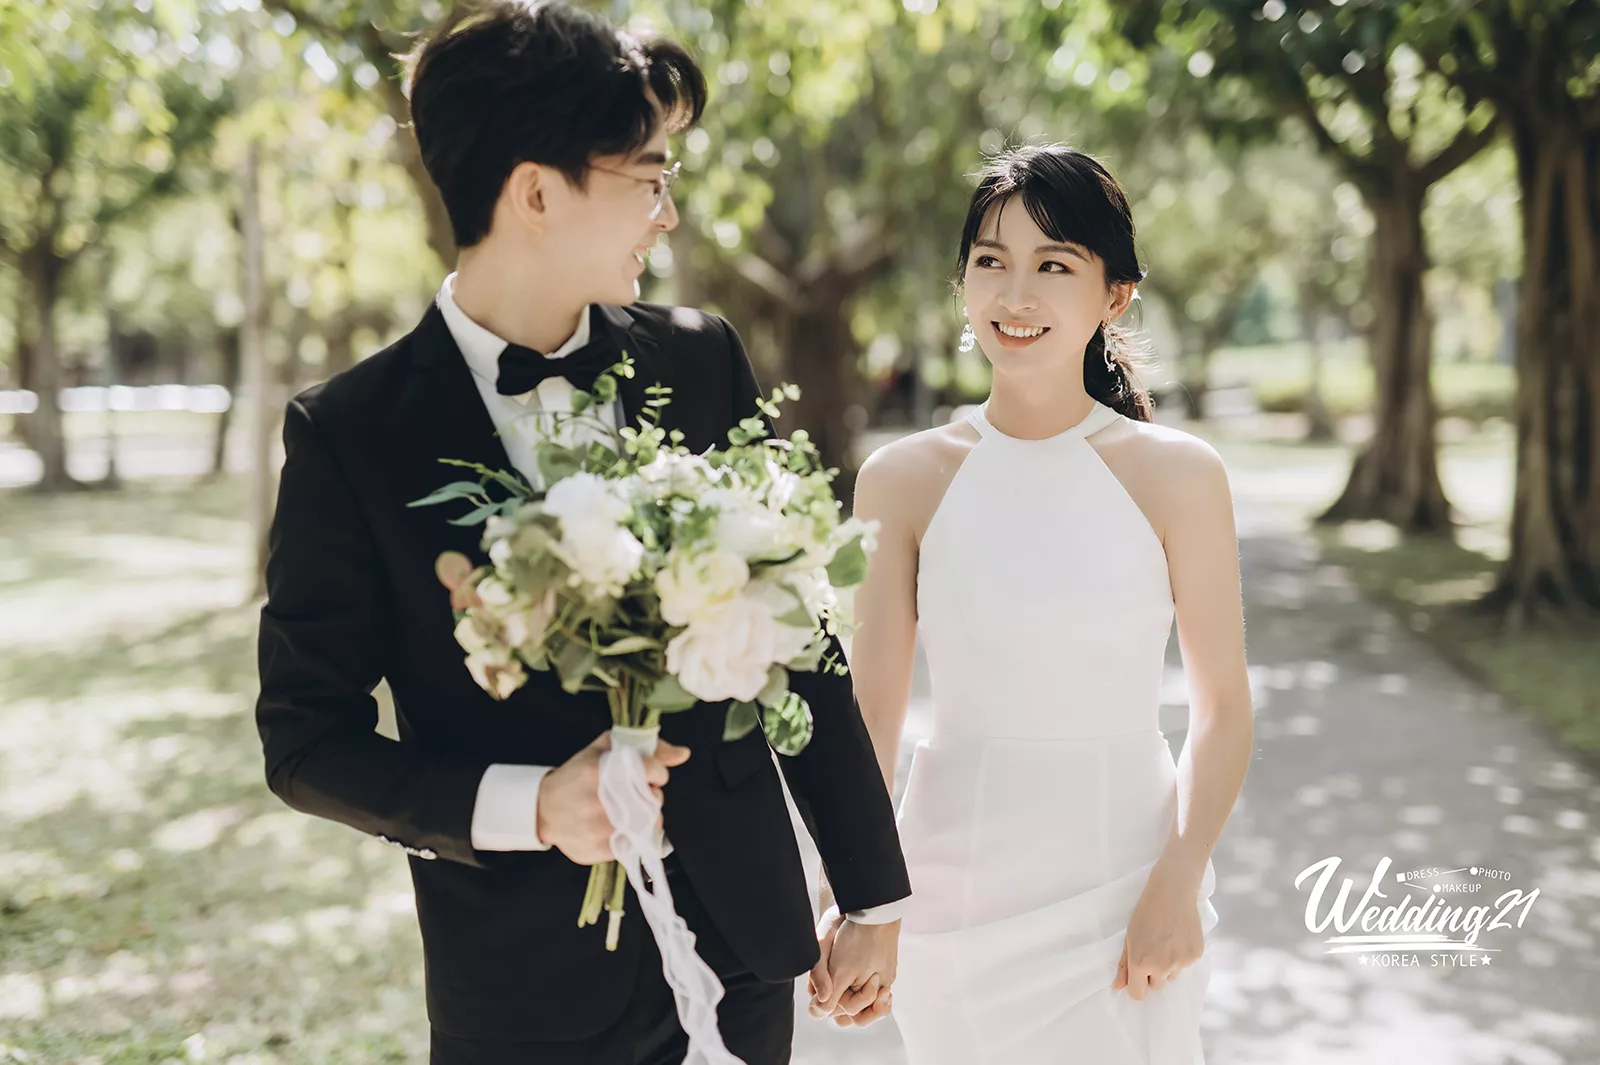 Wedding21韓式婚紗攝影-1